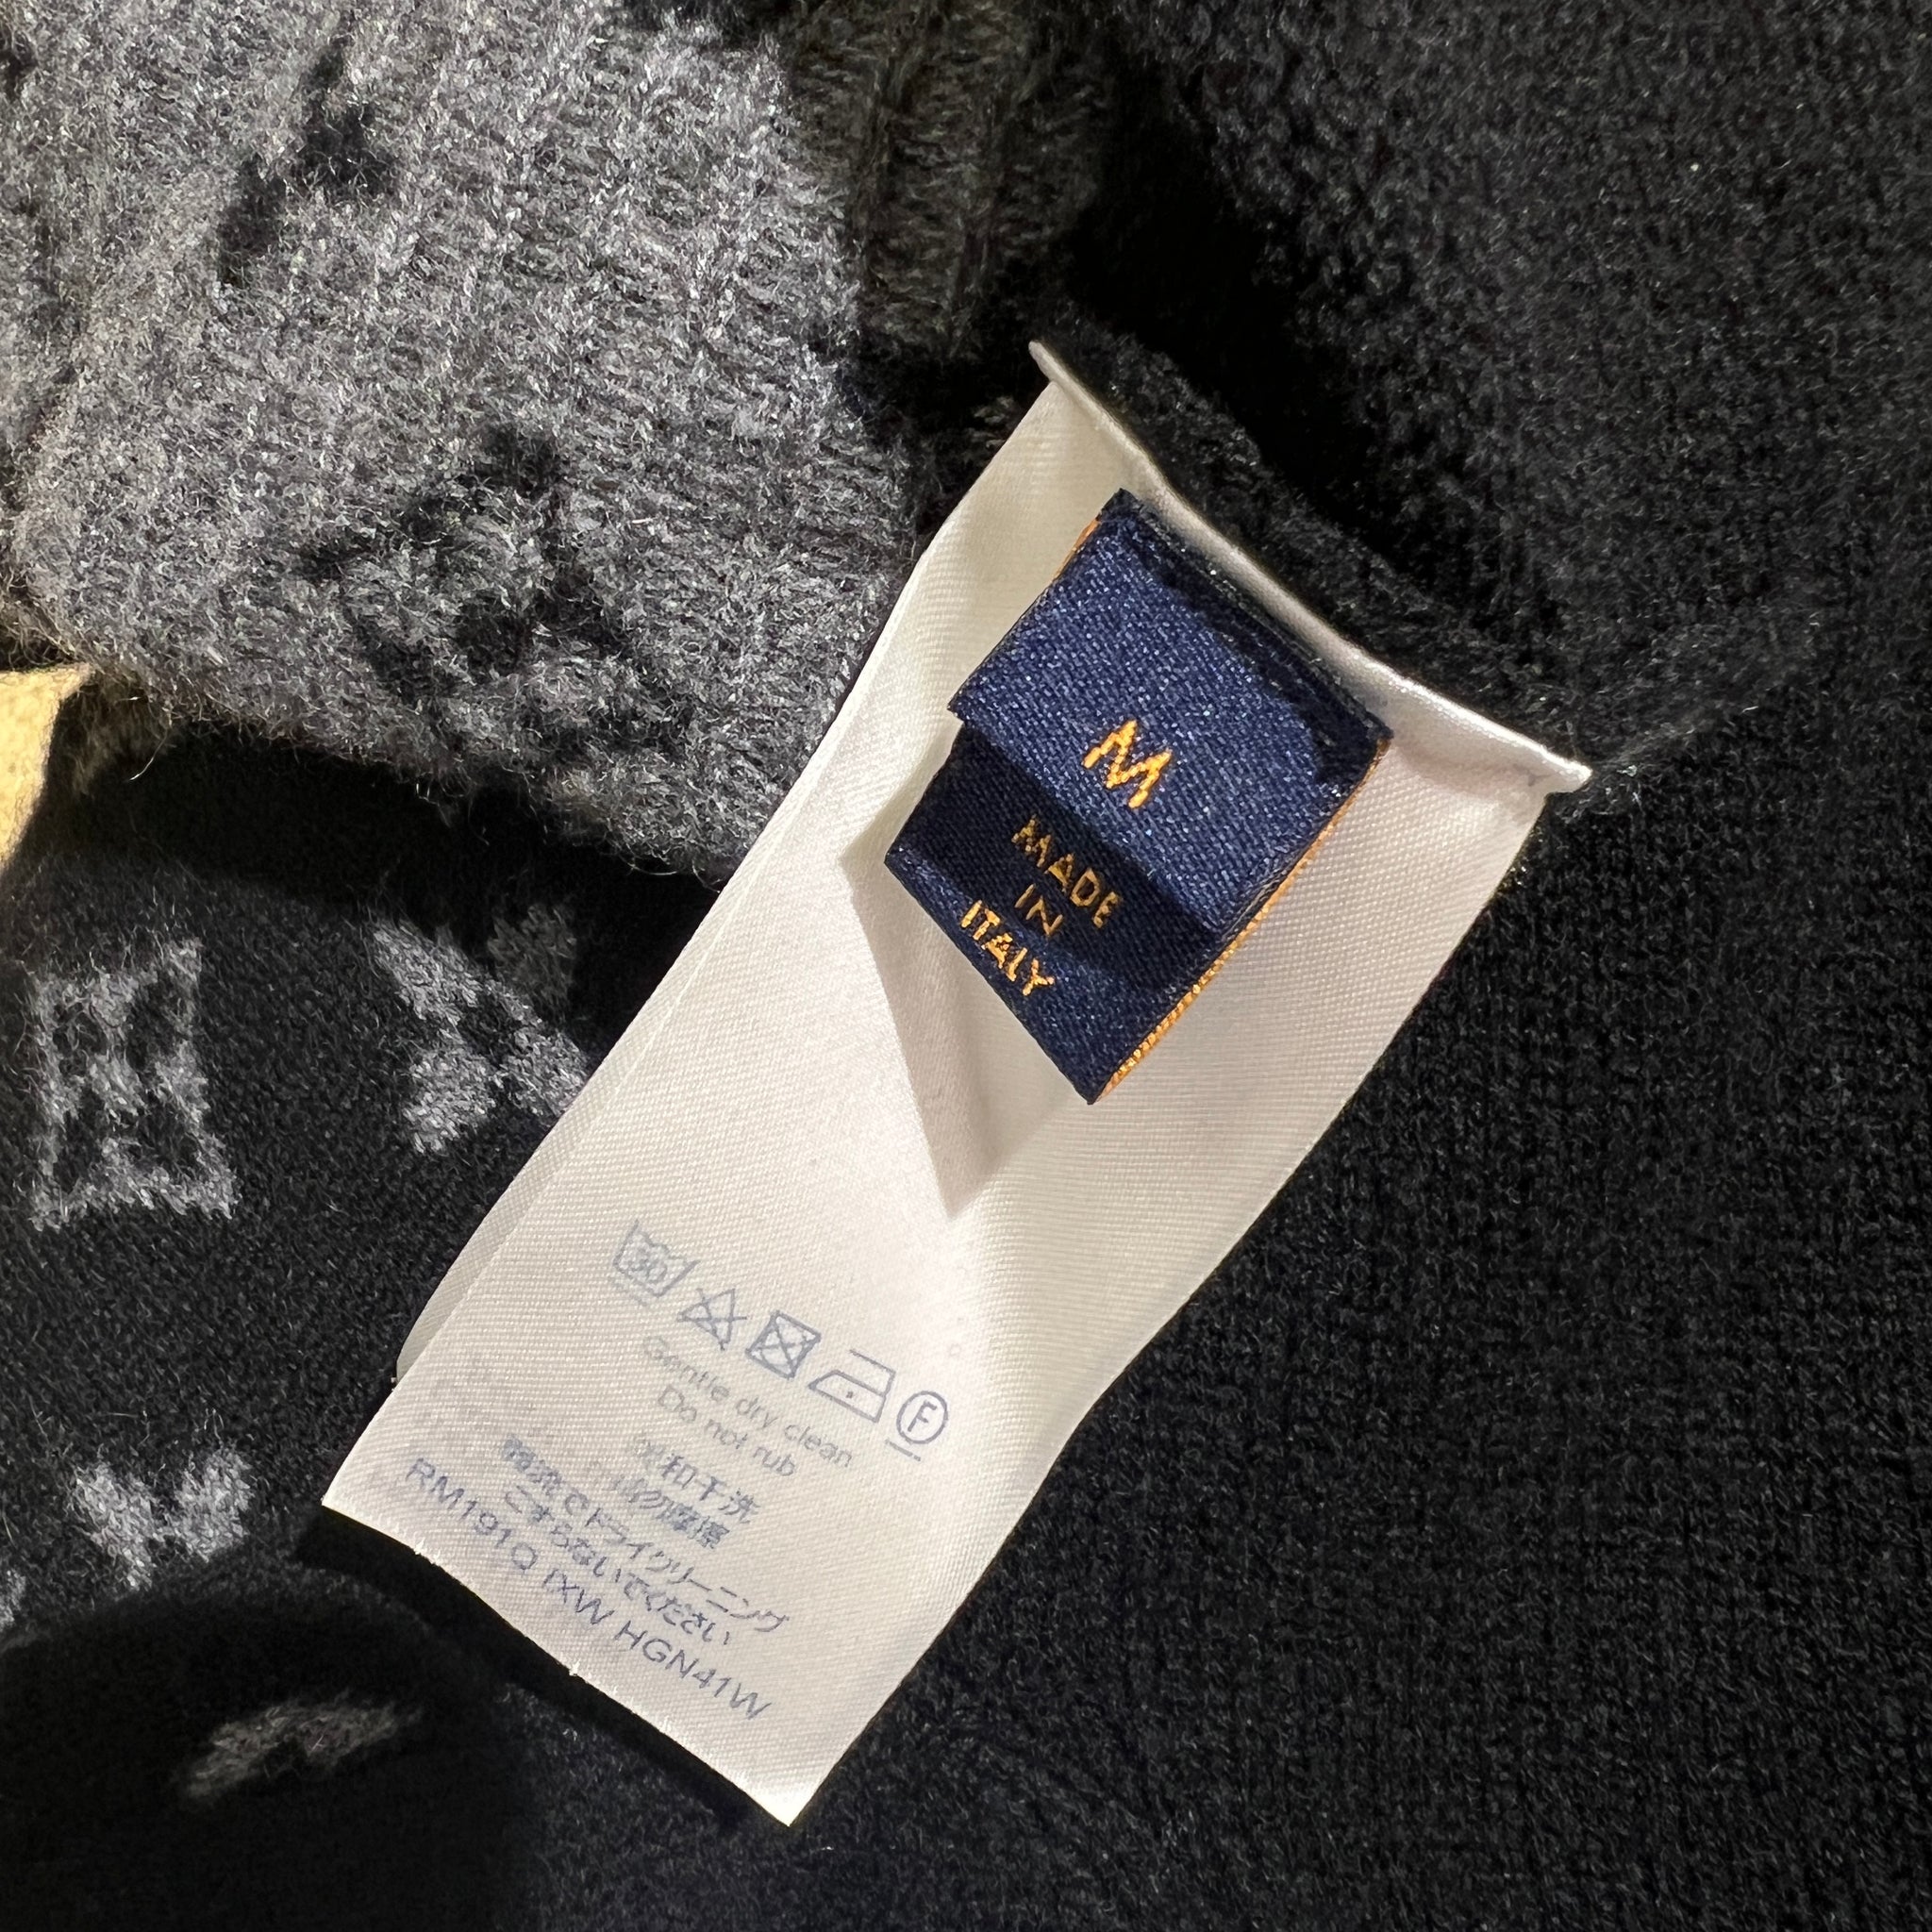 Louis Vuitton Monogram 100%Cashmere Sweater